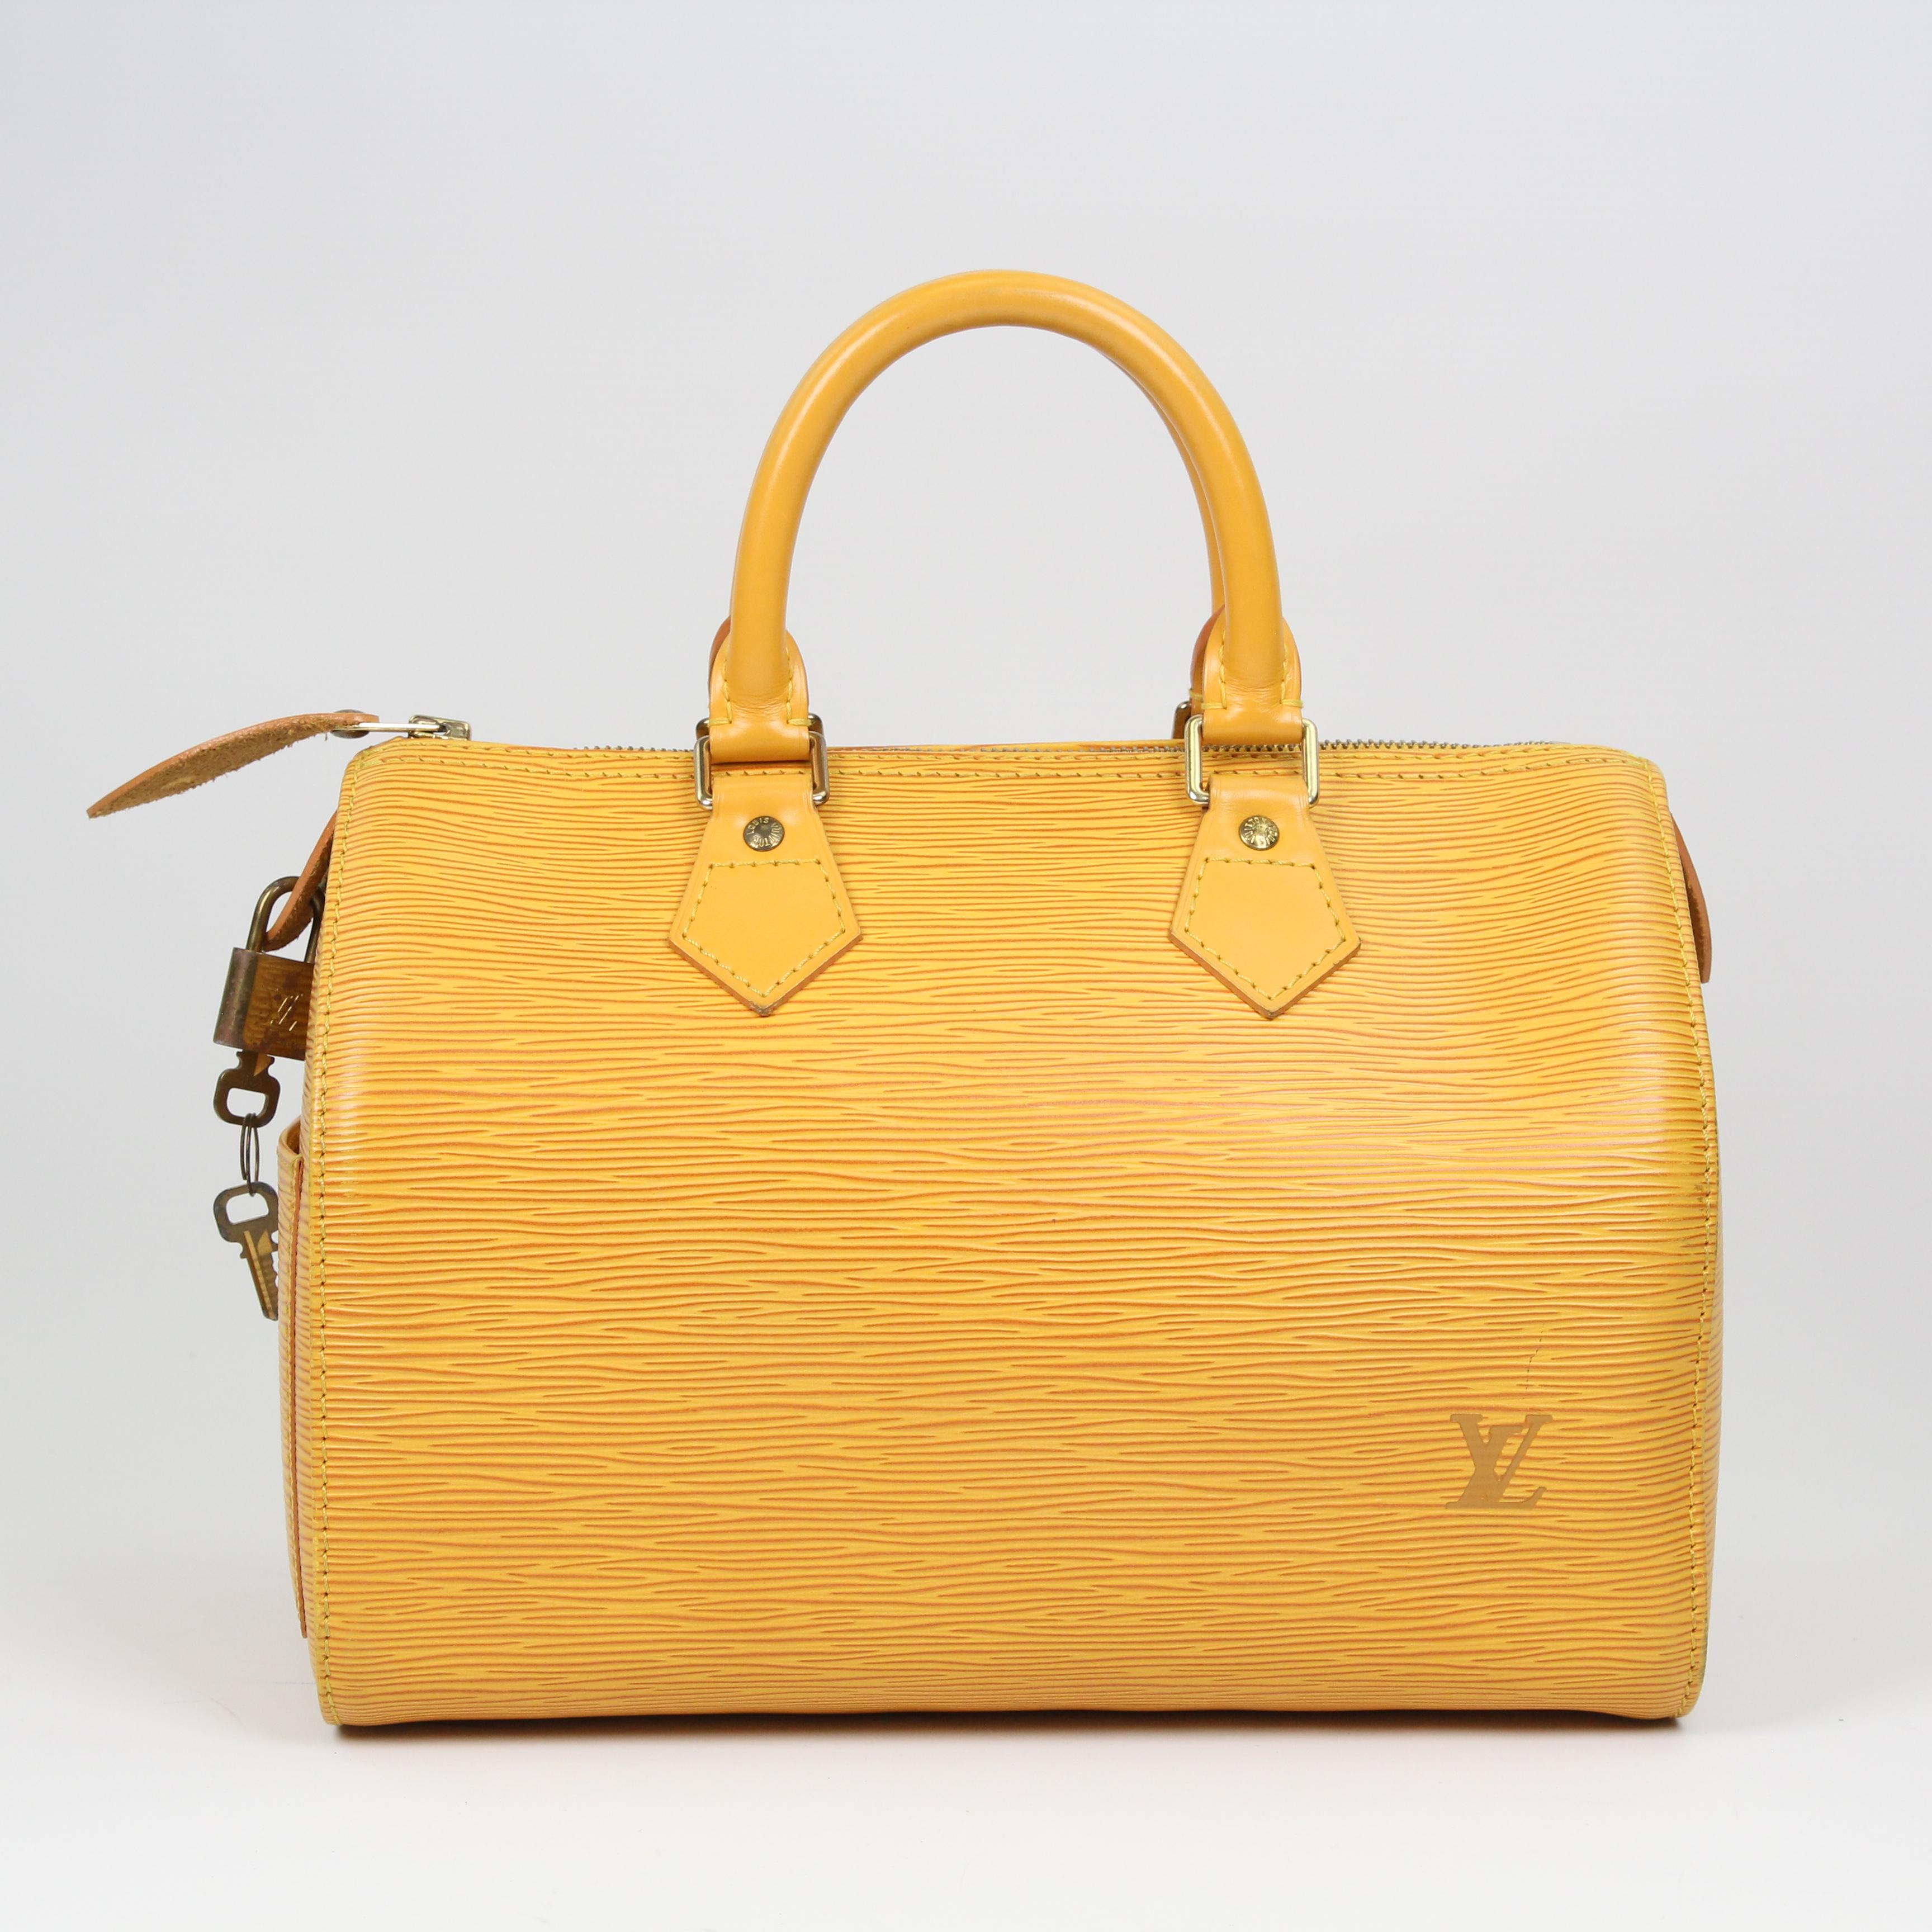 Louis Vuitton Speedy 25 leather handbag For Sale 3